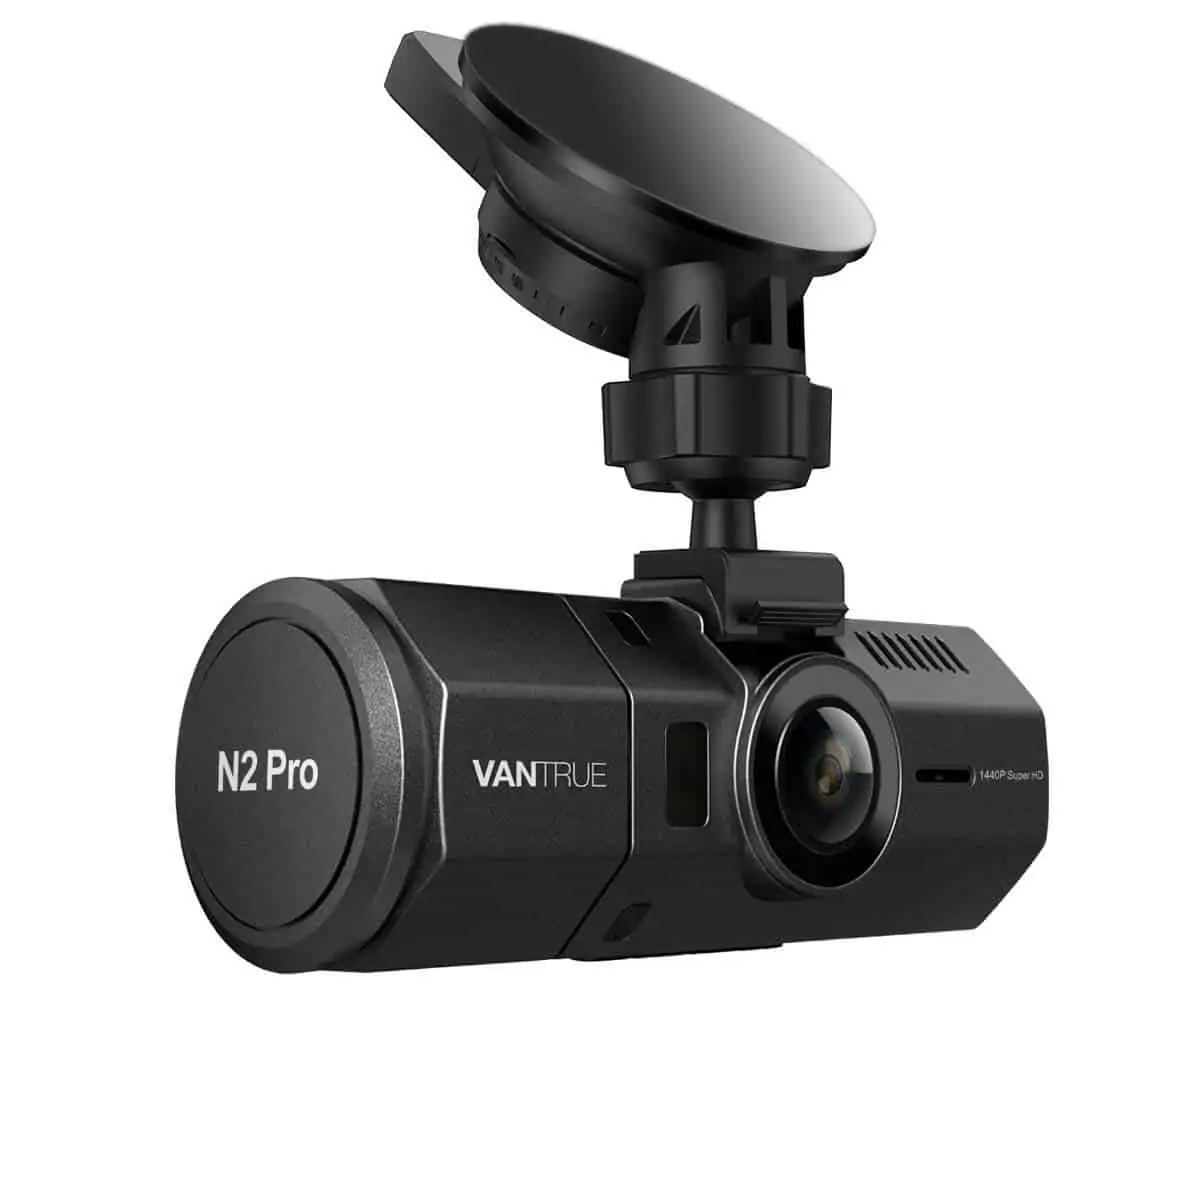 Vantrue N2 Pro camera